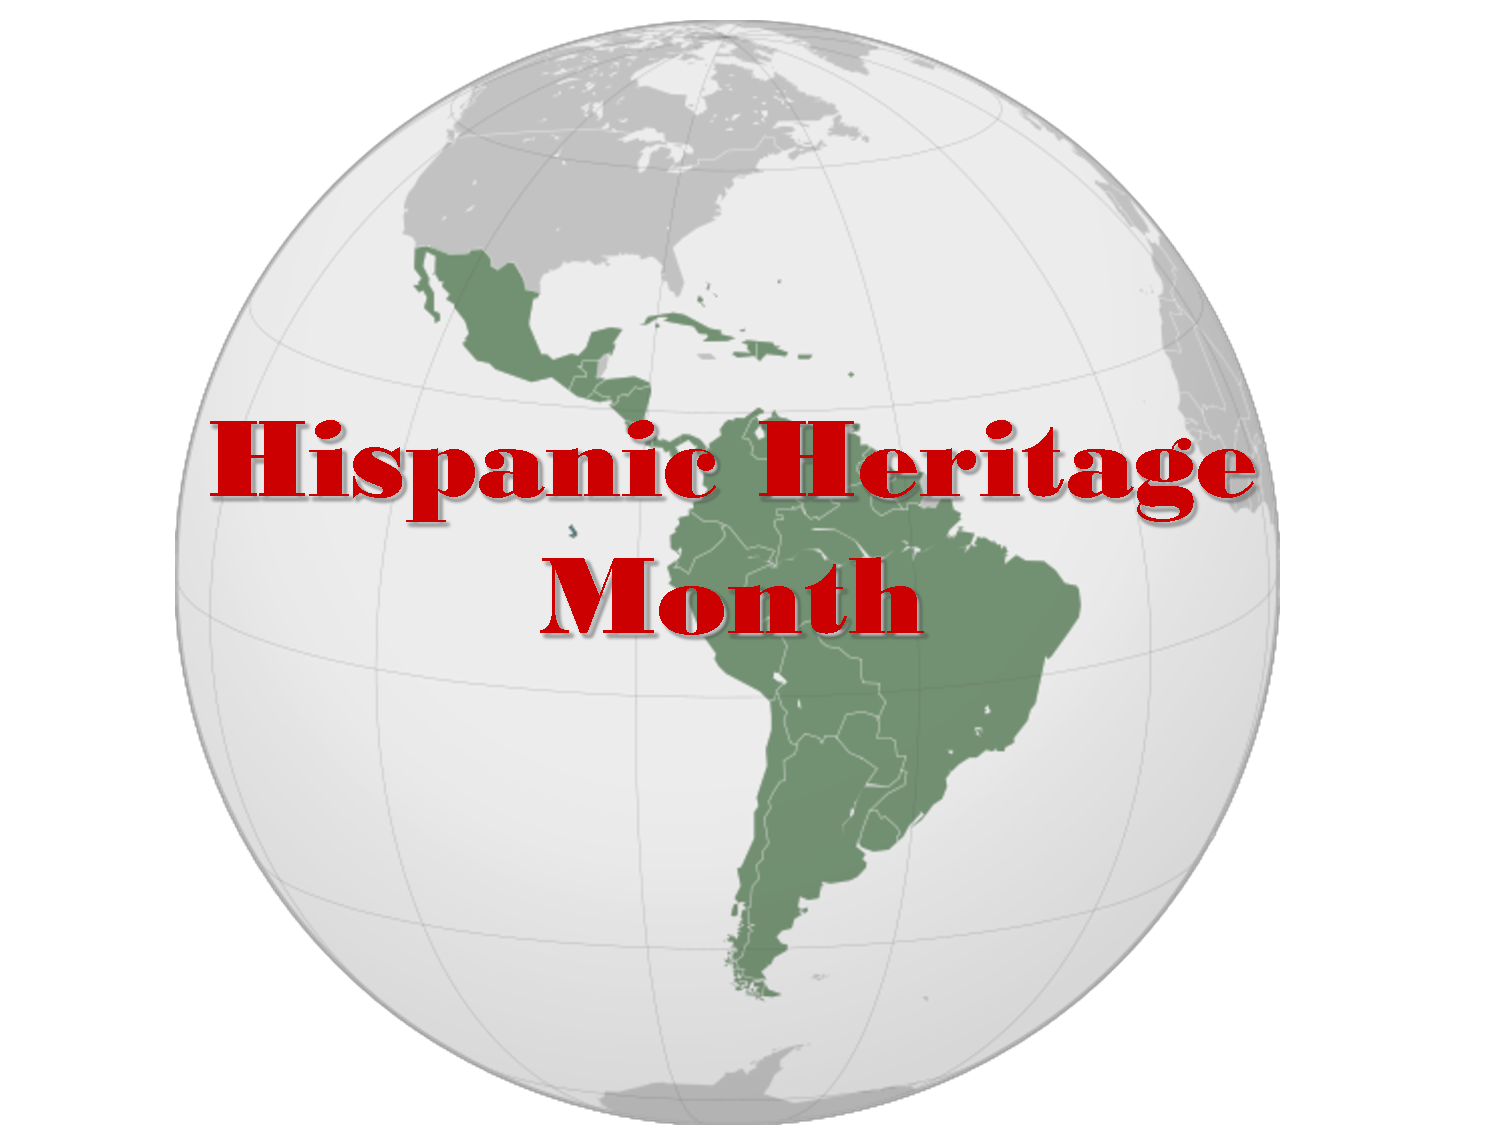 Hispanic Heritage Month   Schoolrack By Dfhdhdhdhjr